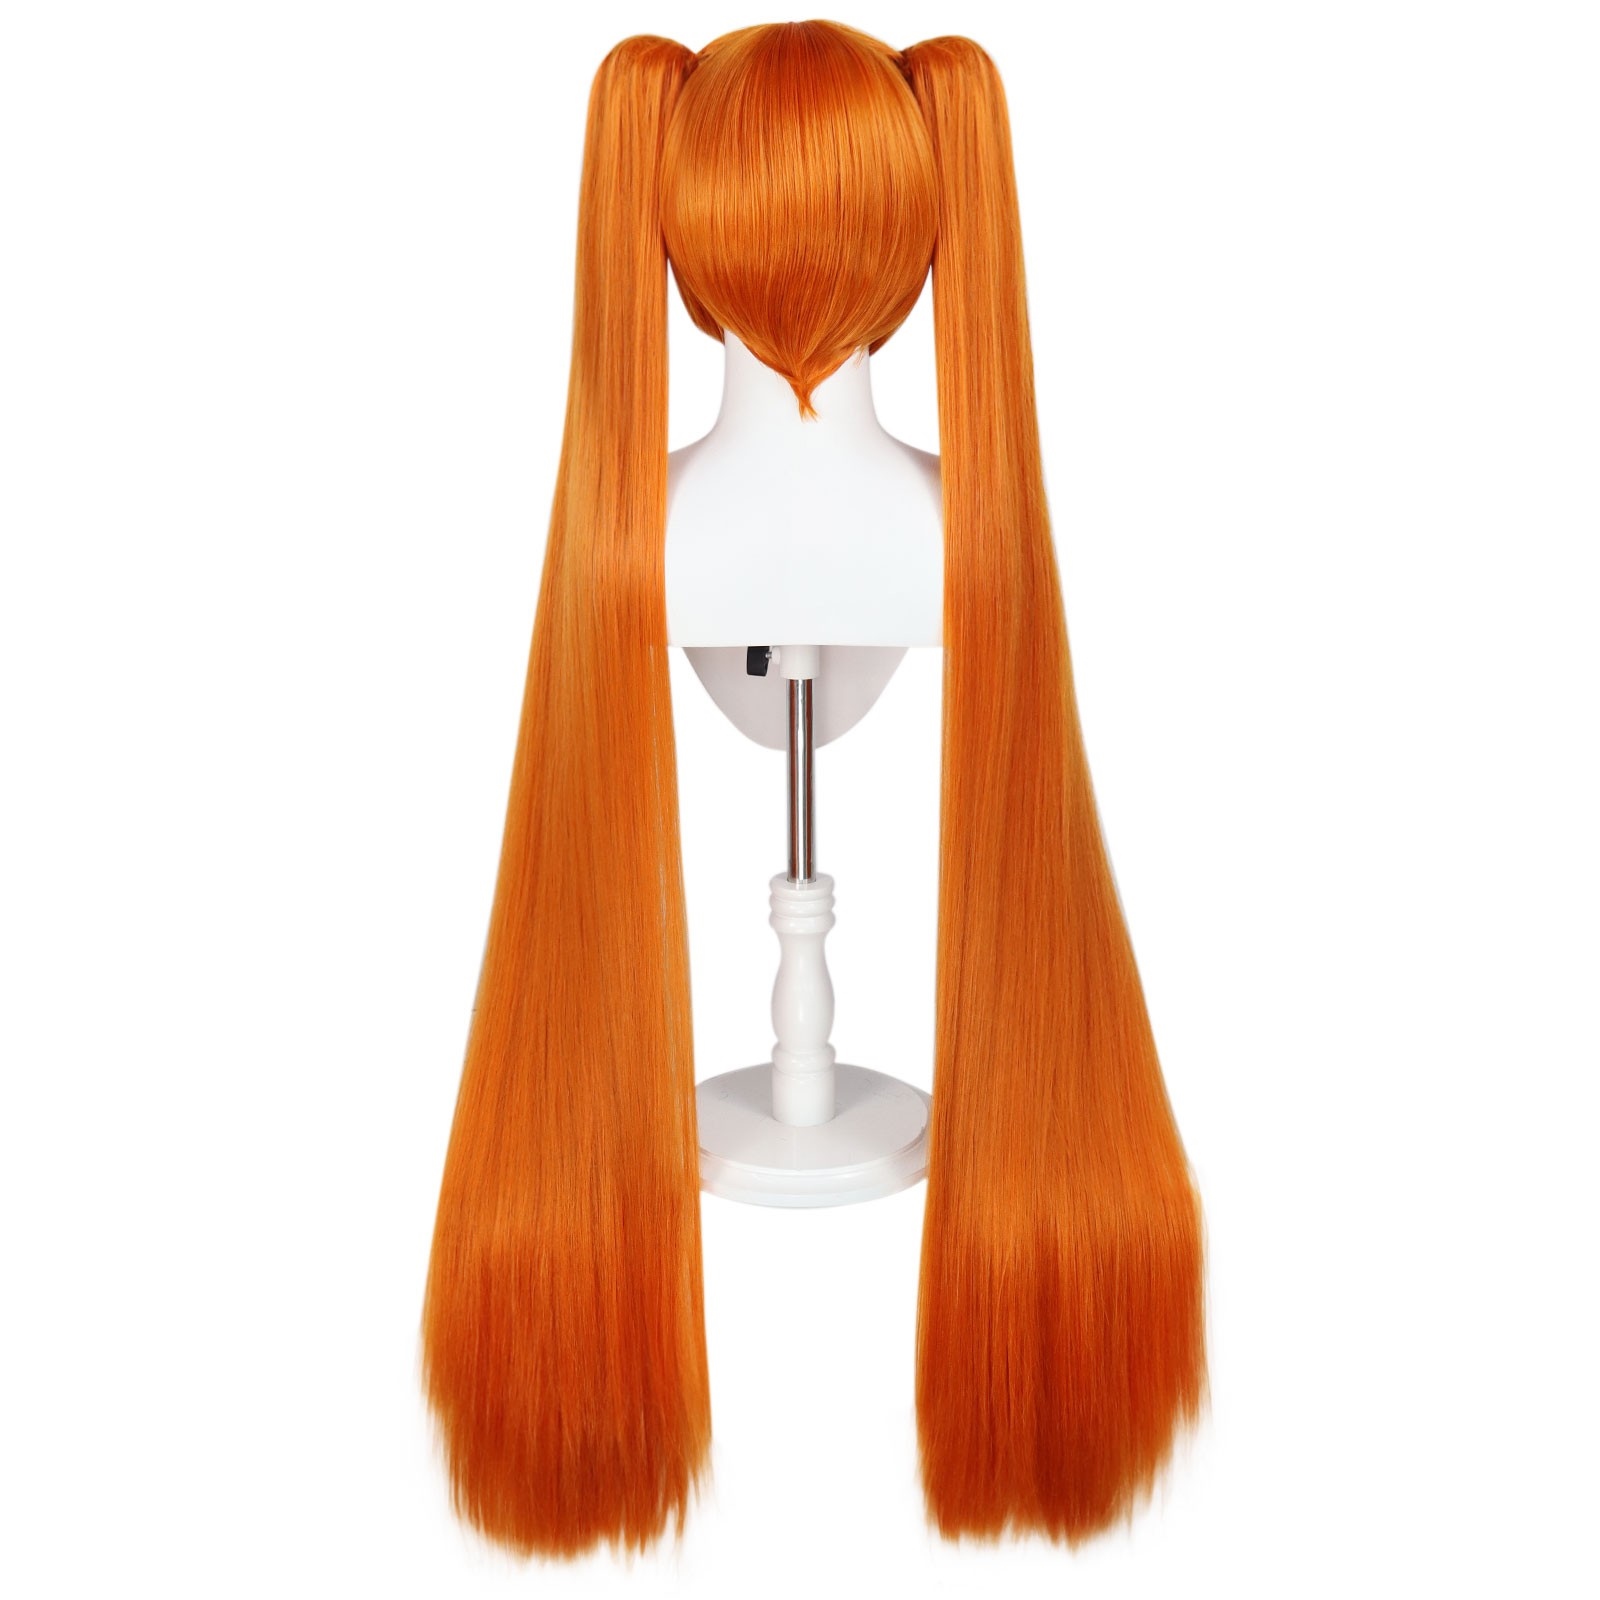 Game Yandere Simulator Osana Najimi 110cm Long Orange Pink Straight Cosplay  Wig Heat Resistant Hair Cosplay Wigs + a wig cap